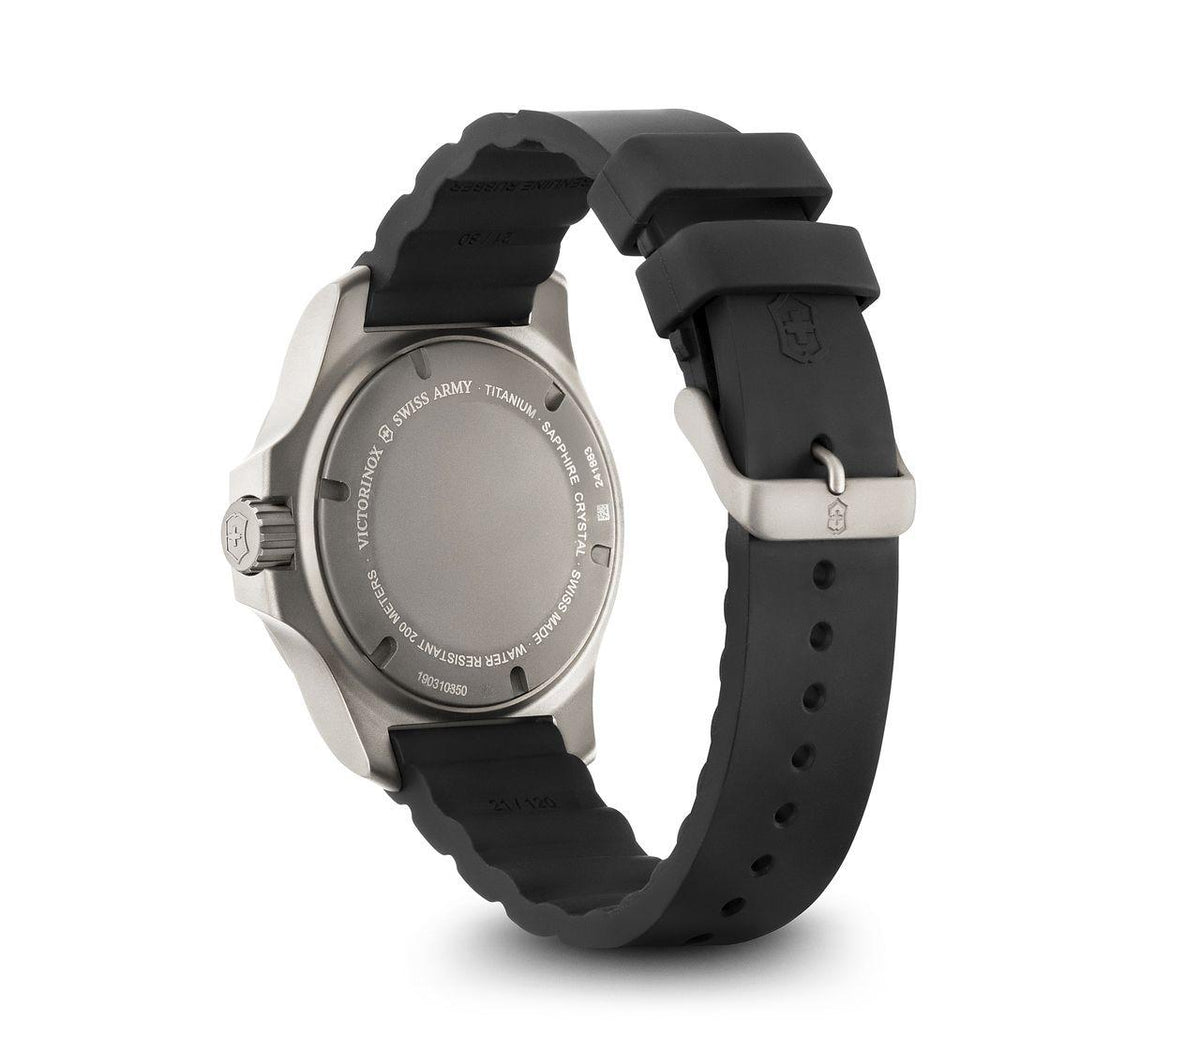 Victorinox Watch - I.N.O.X Titanium  in Black